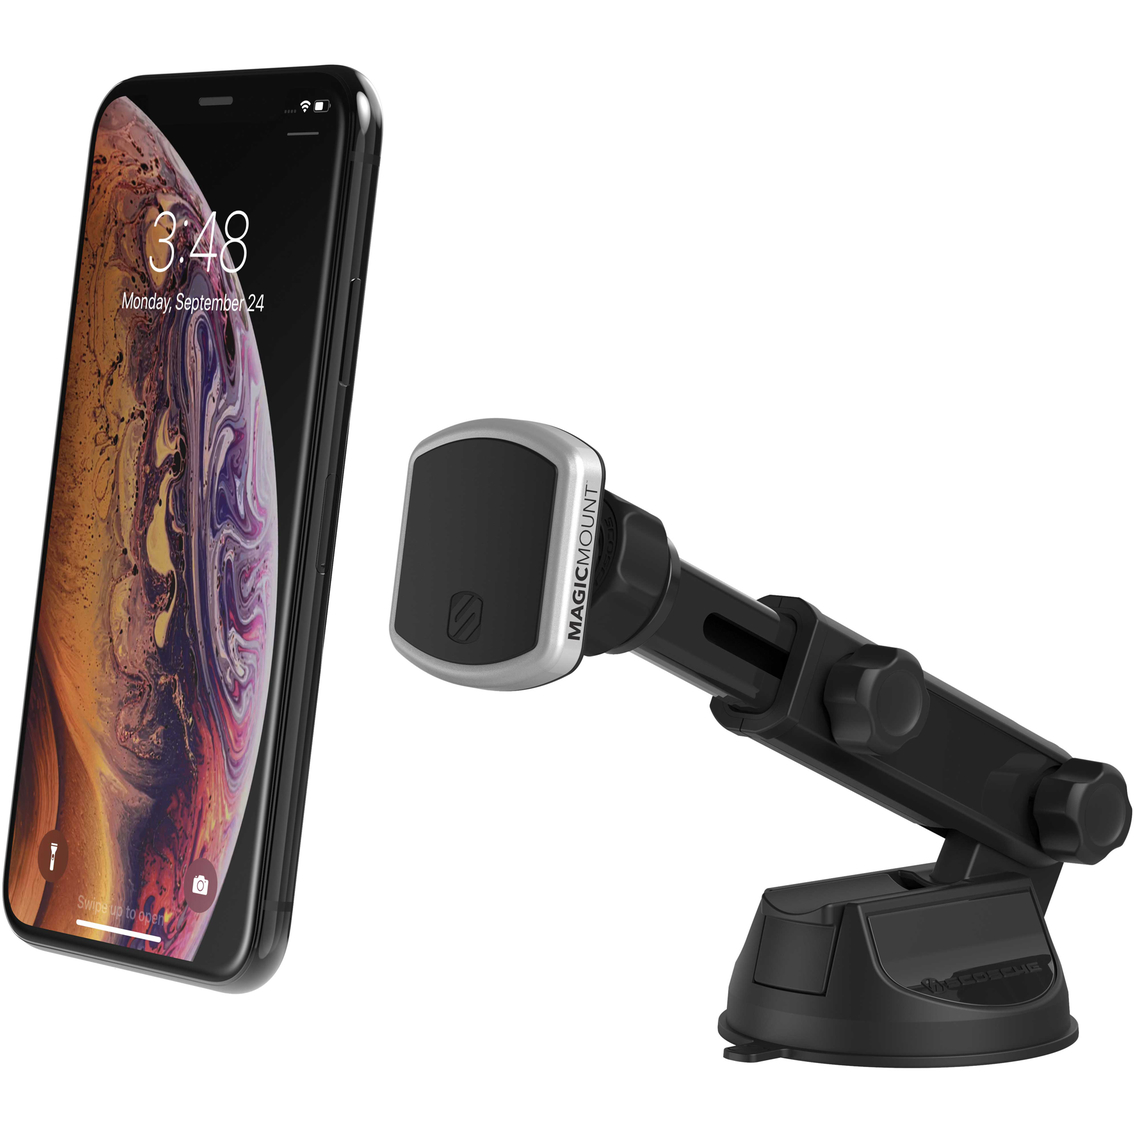 Scosche MagicMount Pro Telescoping Arm Phone Mount - Image 2 of 10